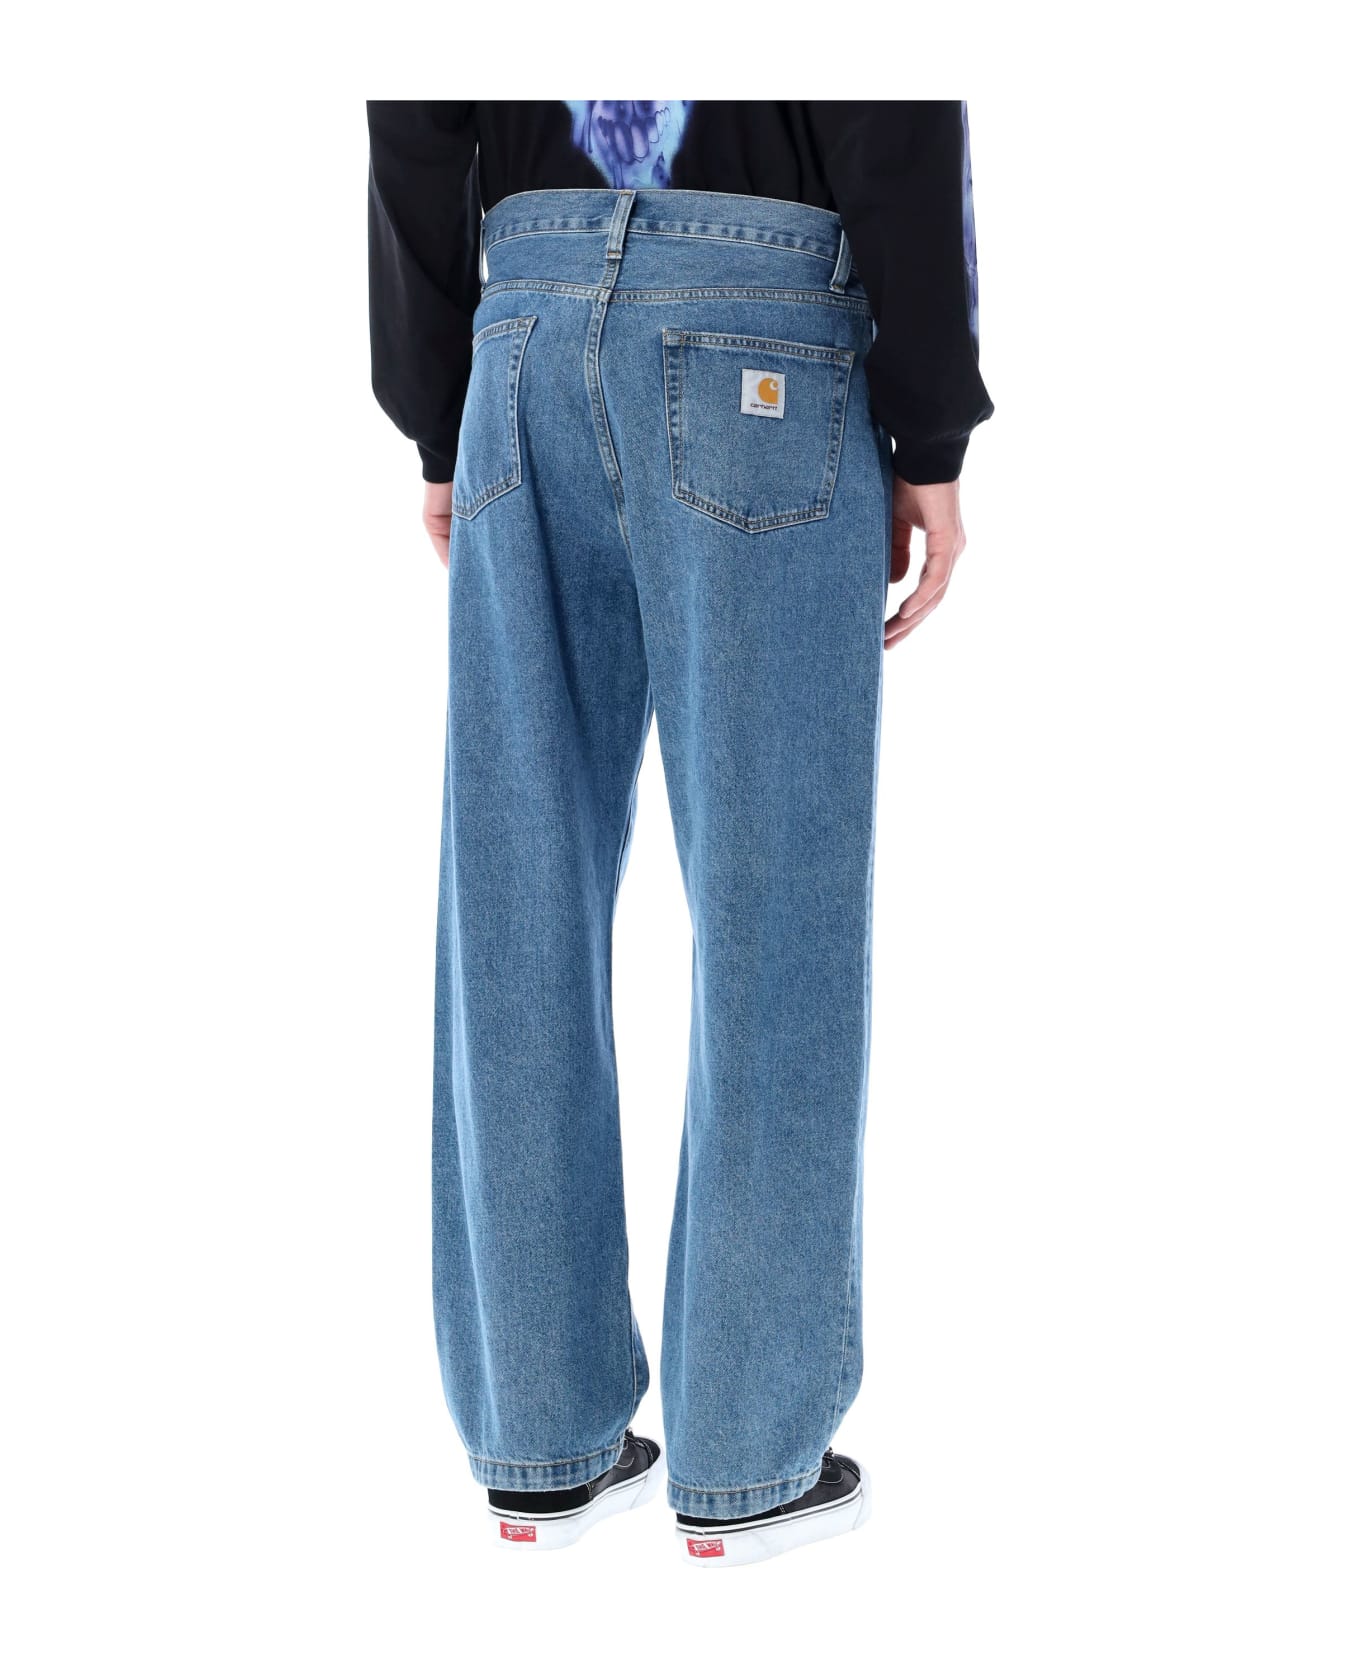 Carhartt Landon Jeans - BLUE